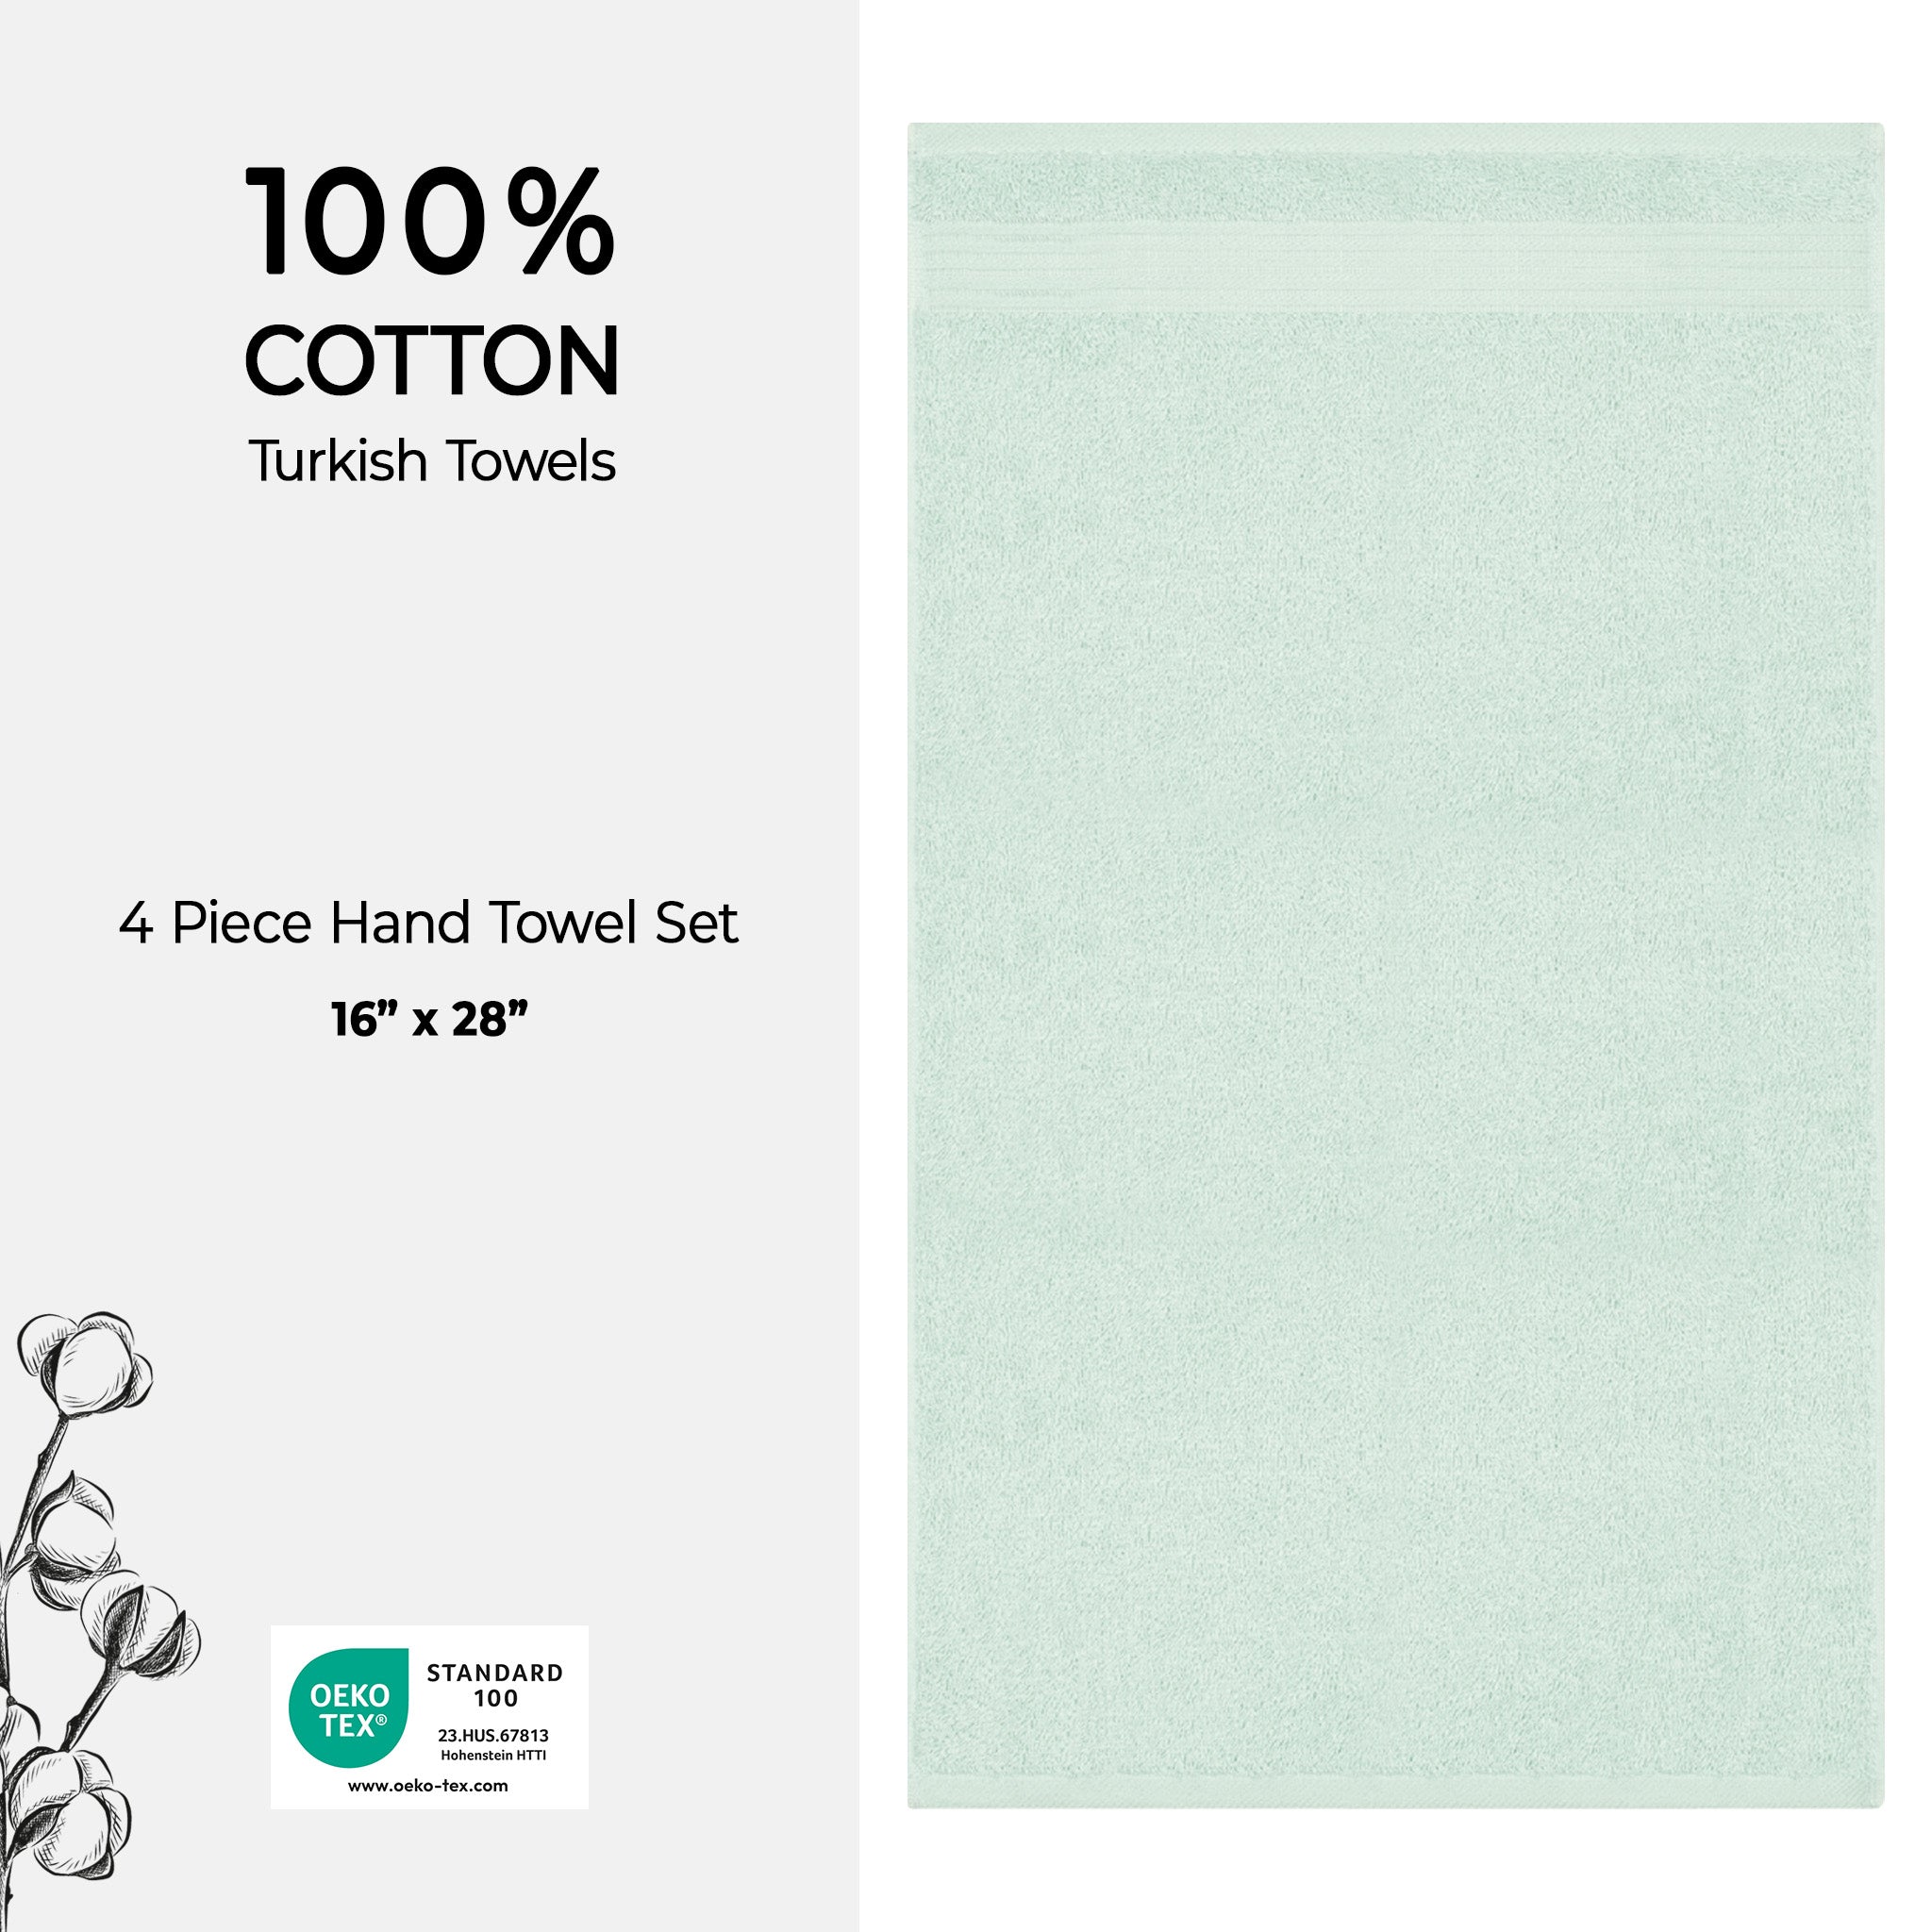 American Soft Linen Bekos 100% Cotton Turkish Towels, 4 Piece Hand Towel Set -mint-04